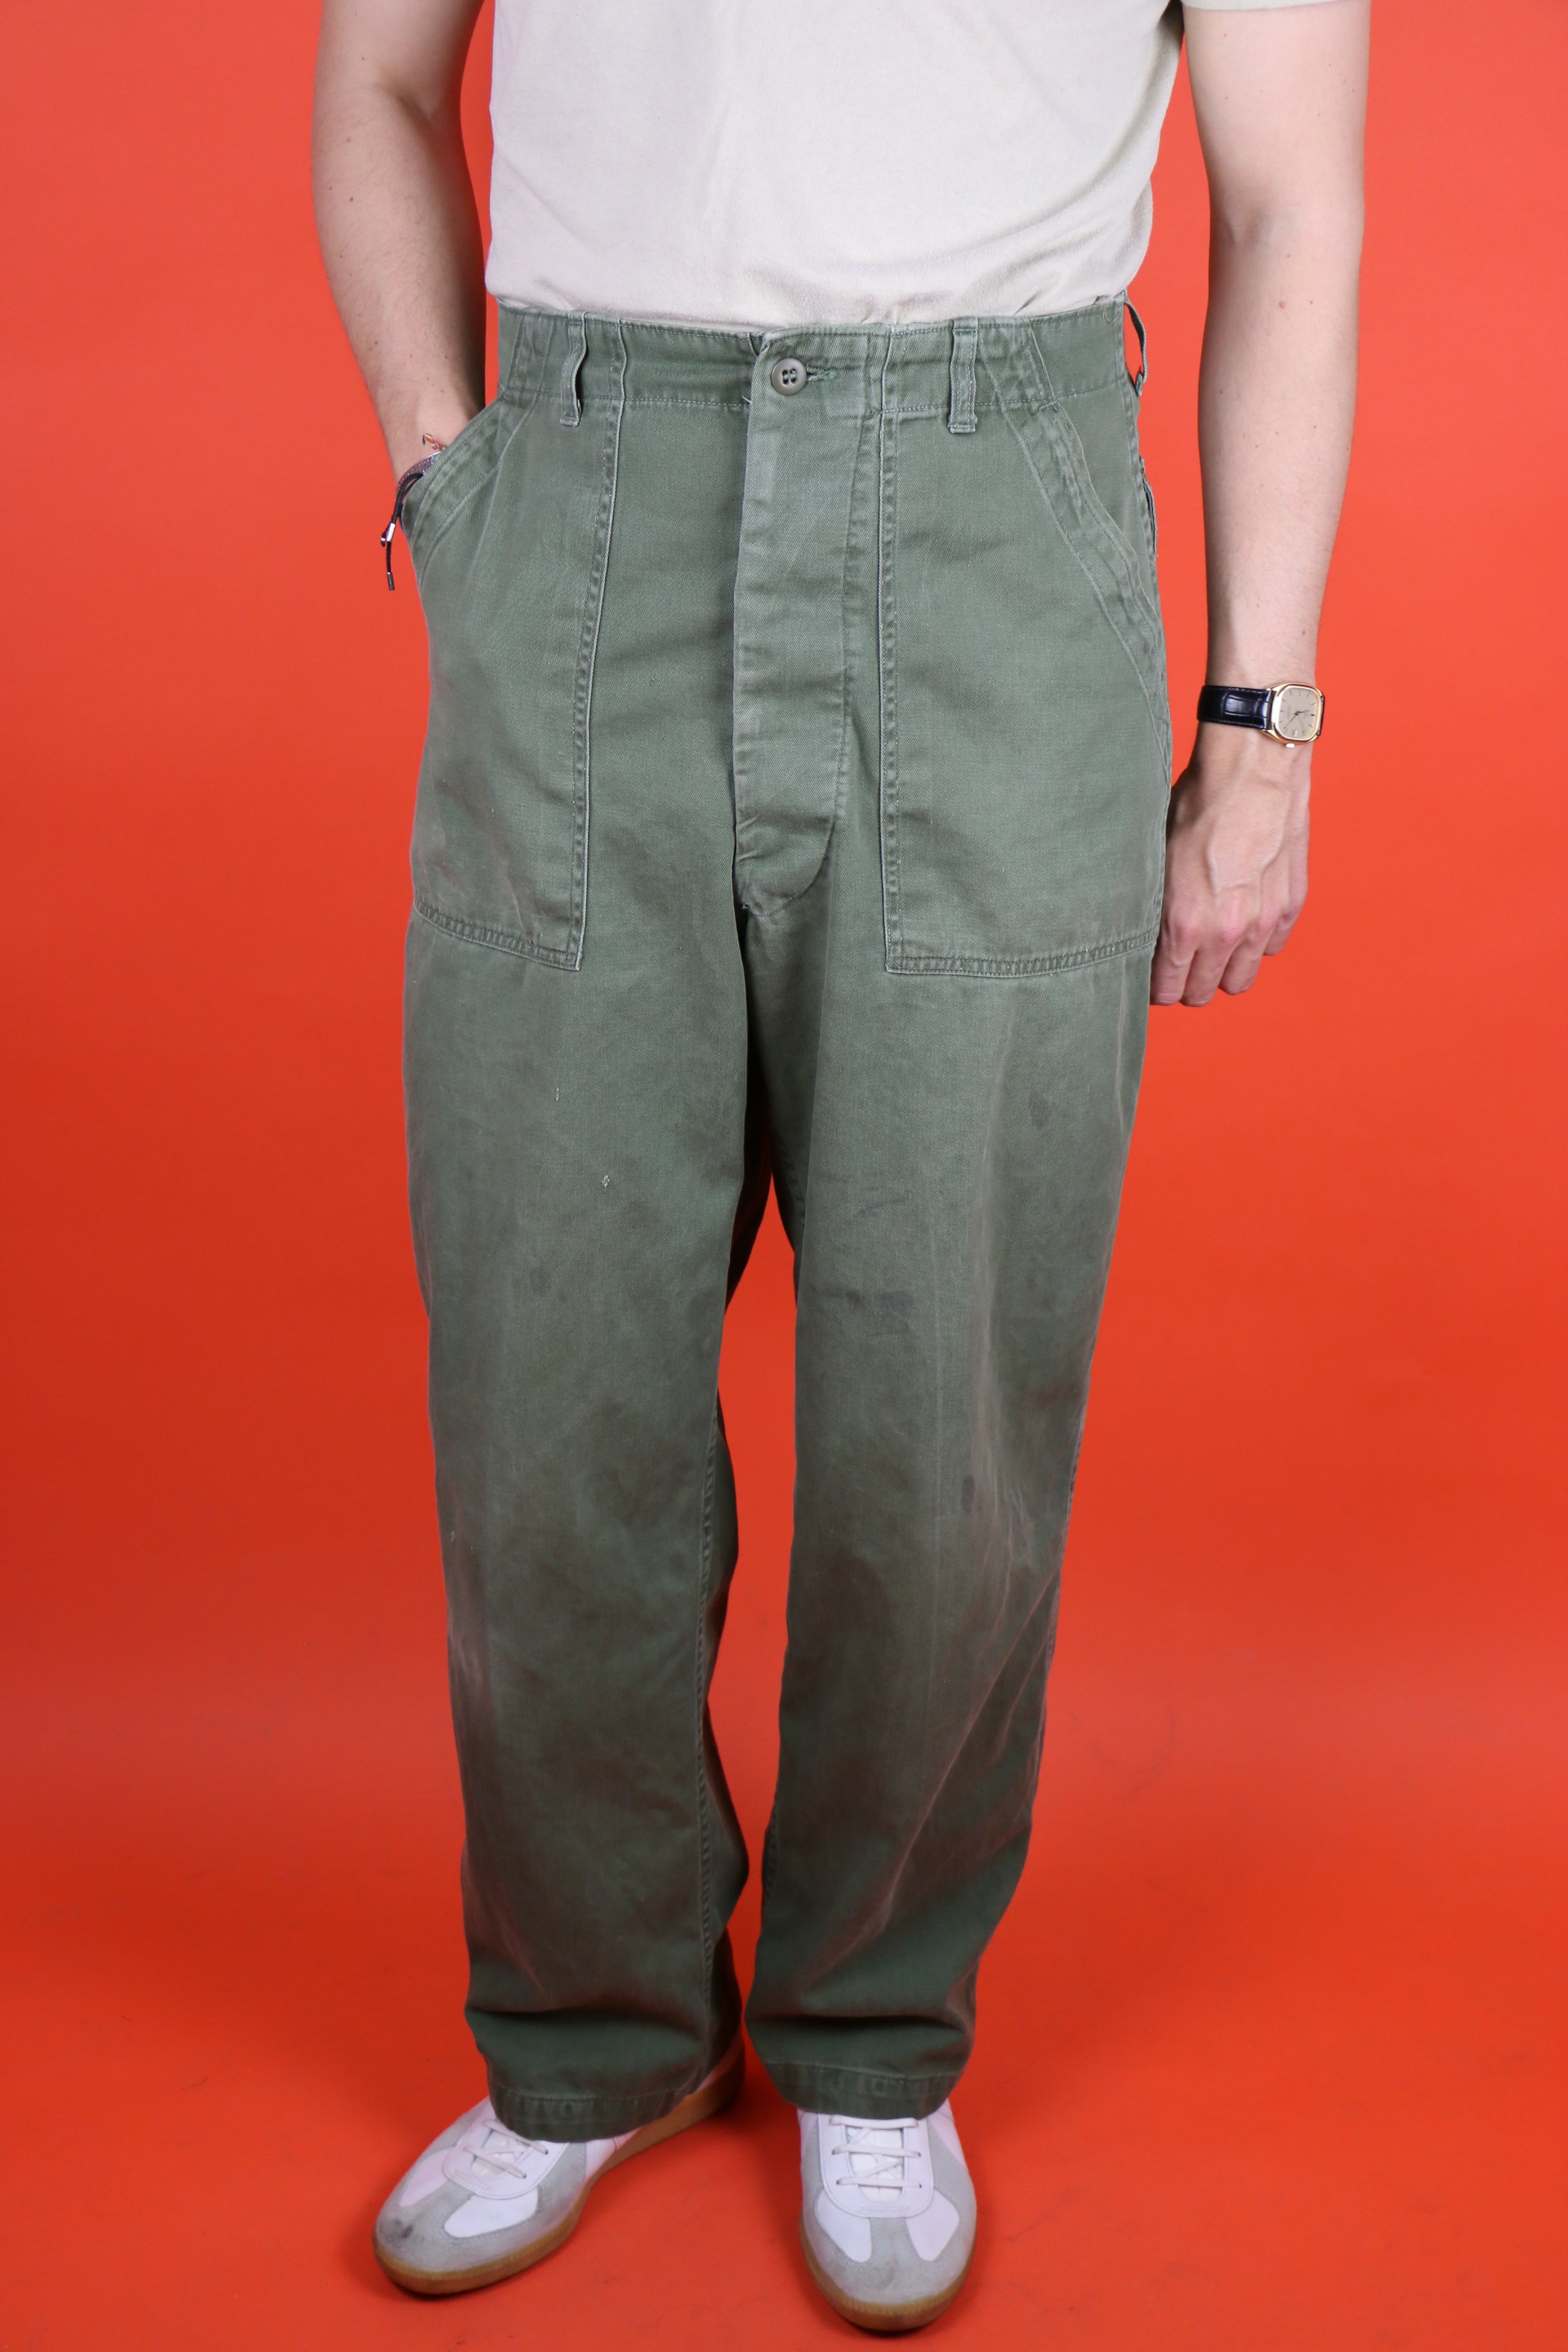 U.S. Army OG-107 Fatigue Pants ~ Vintage Store Clochard92.com